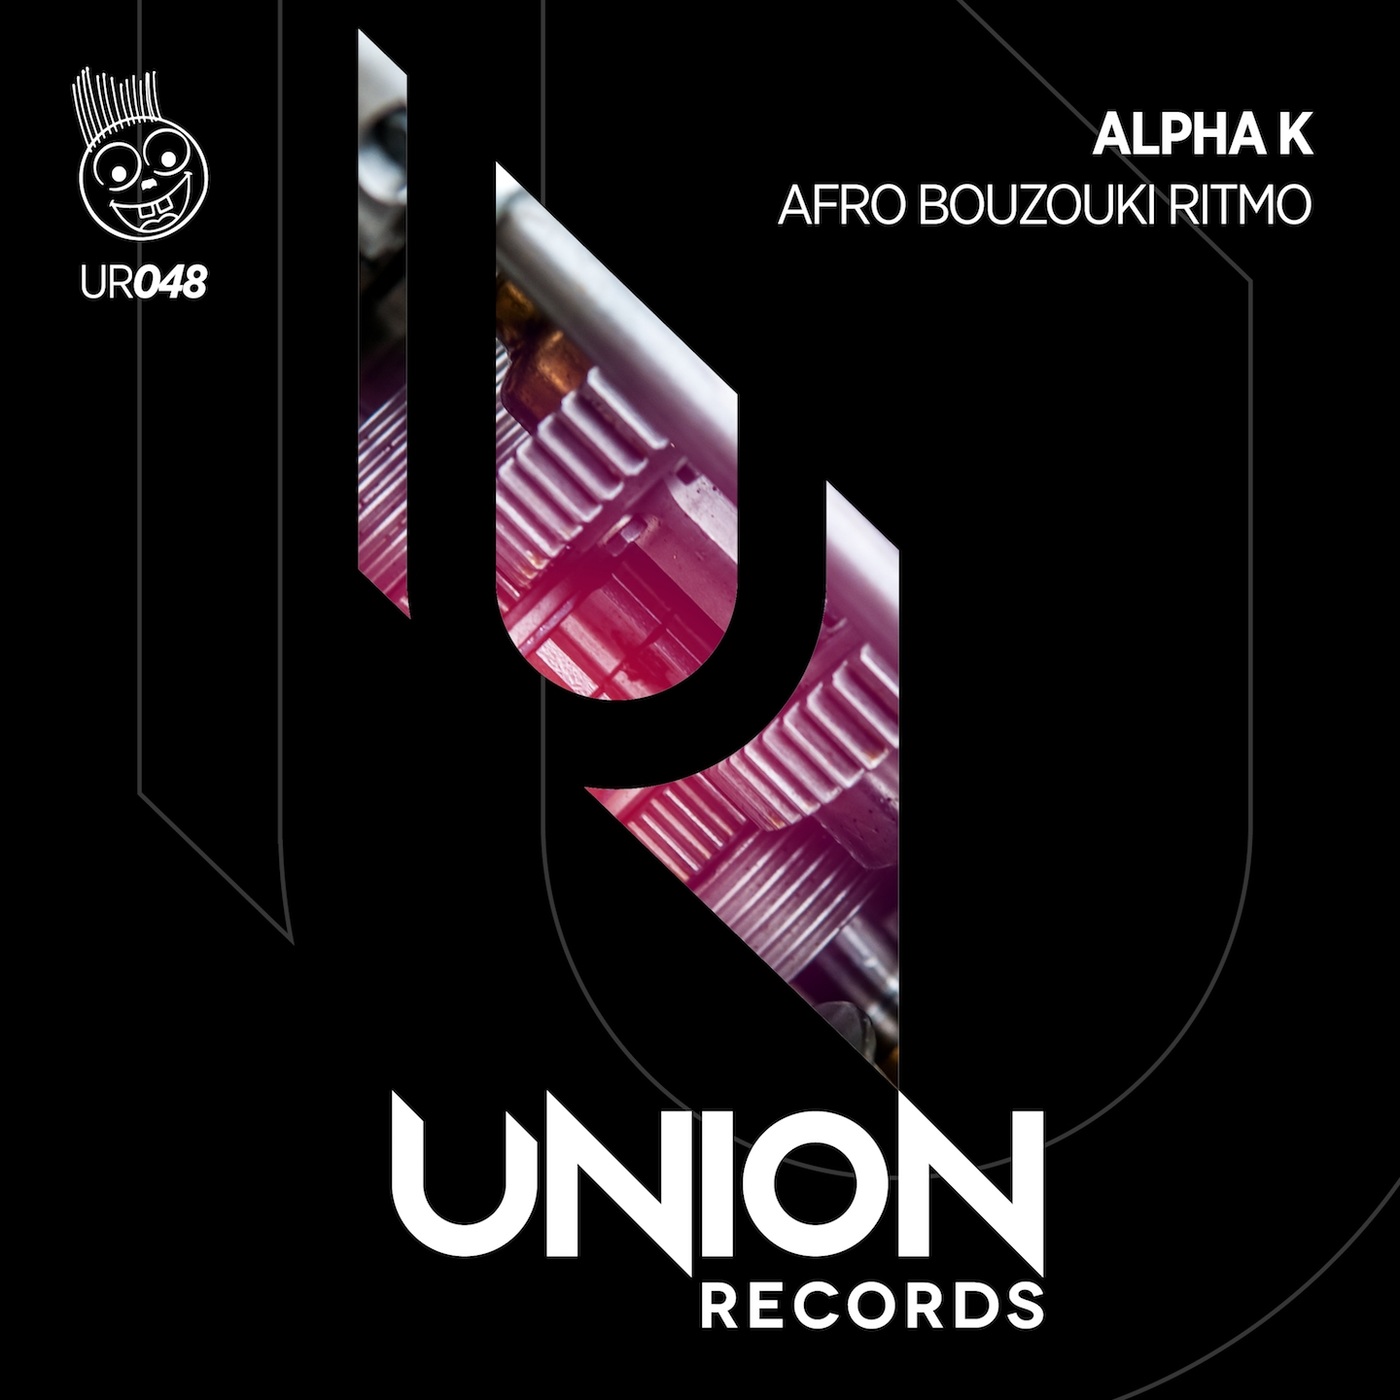 Alpha K - Afro Bouzouki Ritmo / Union Records